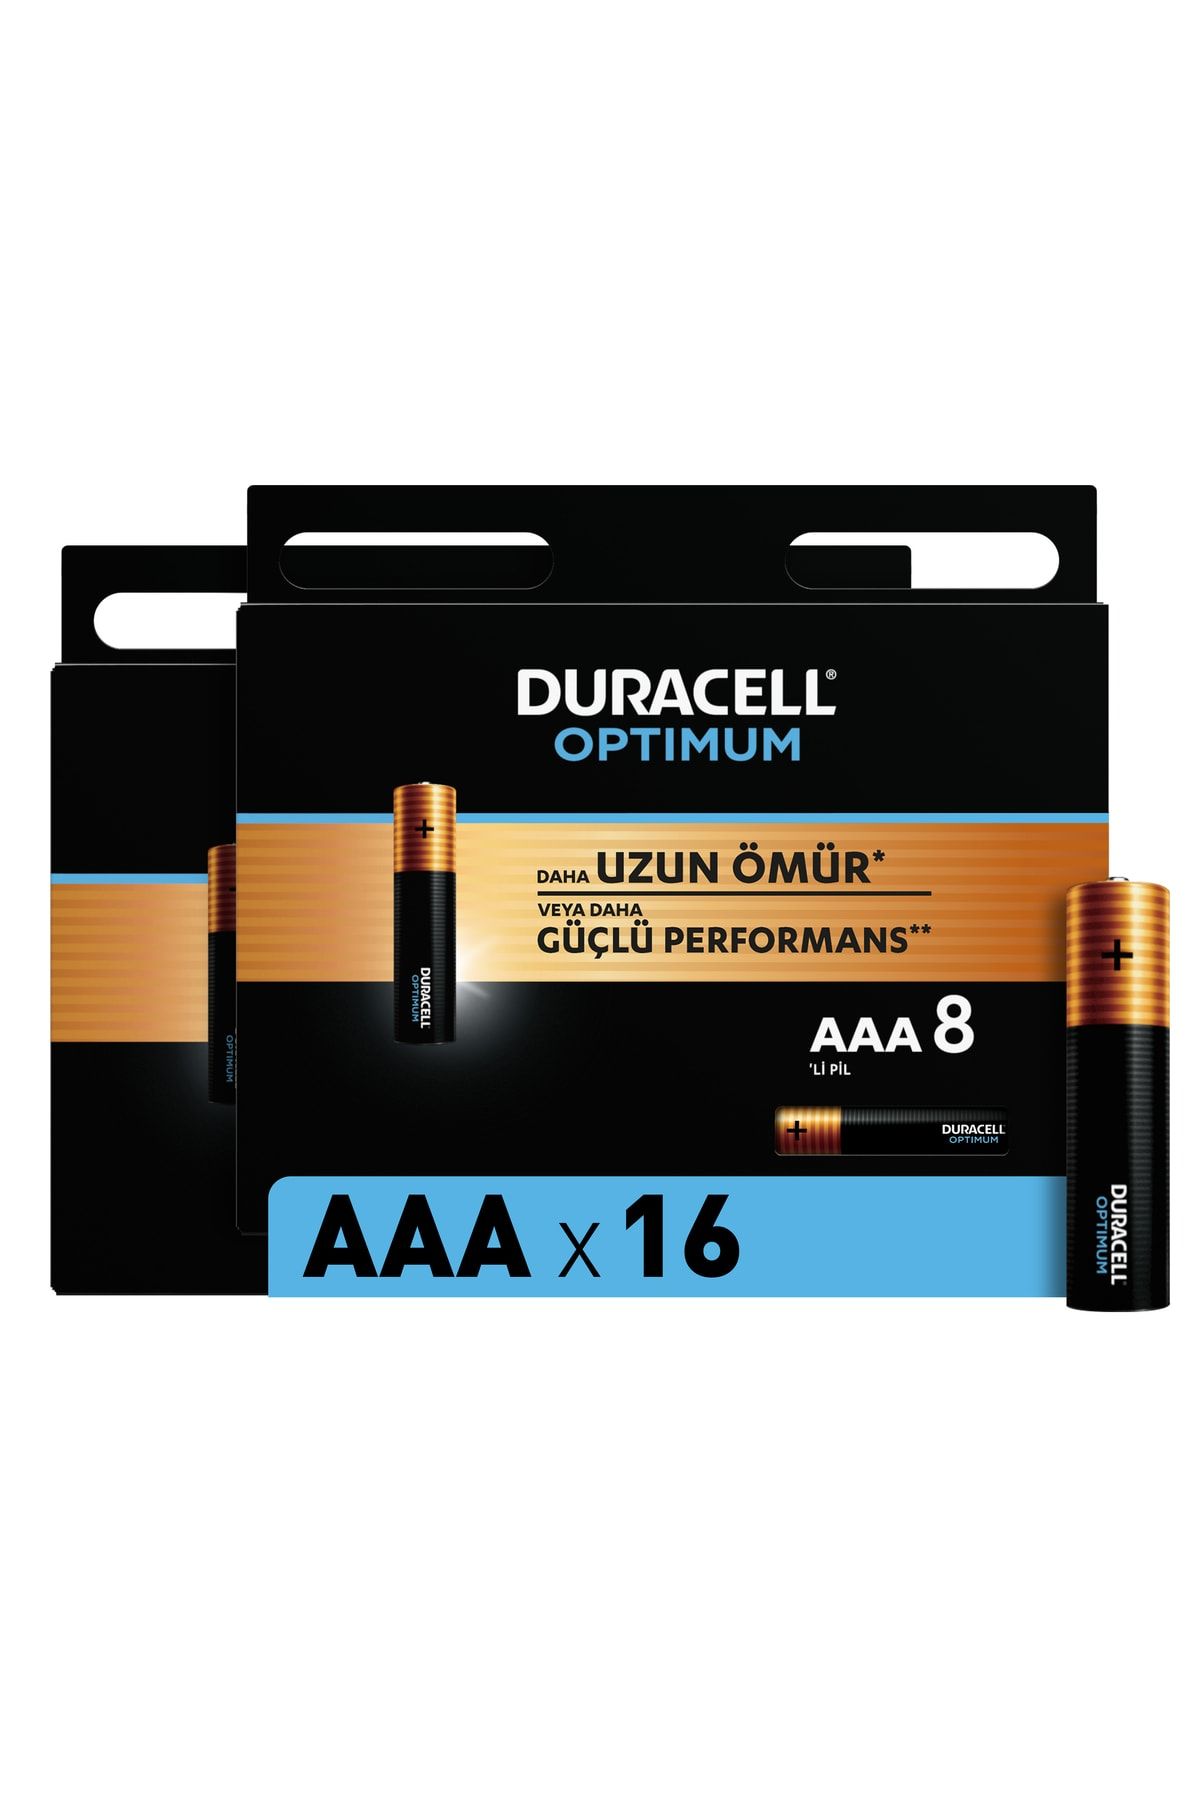 Duracell Optimum Aaa Alkalin Pil, 1,5 V Lr03 Mn2400, 16’li Paket